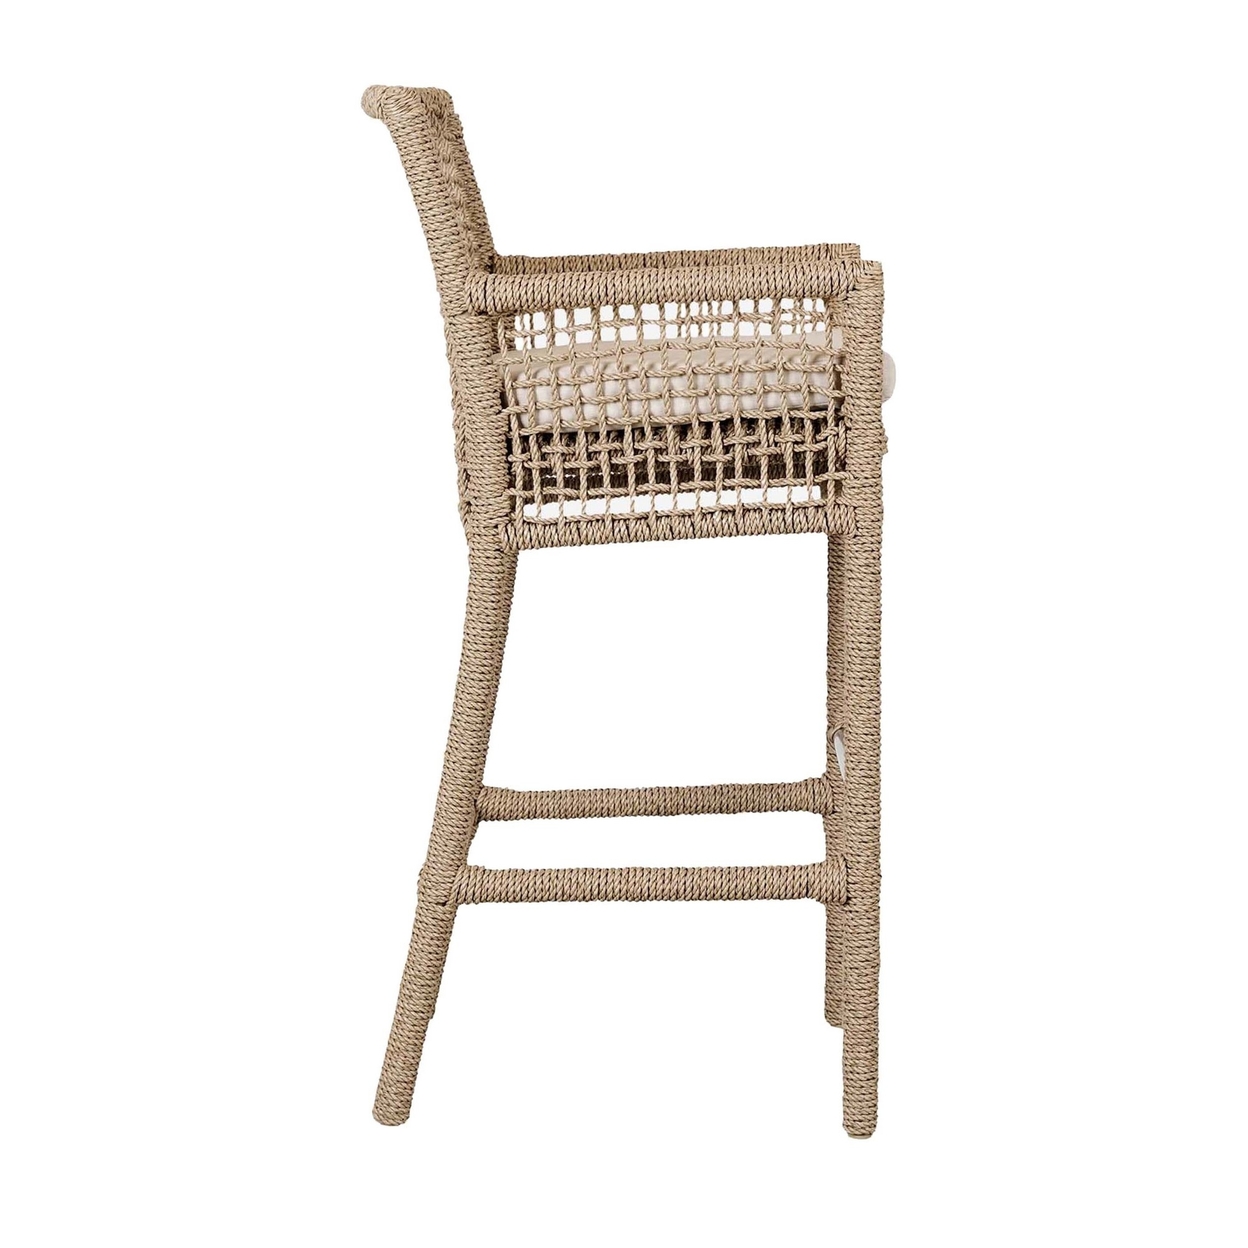 Zev 31 Inch Outdoor Bar Stool Chair, Rope Woven, Ivory Olefin Fabric Seat- Saltoro Sherpi